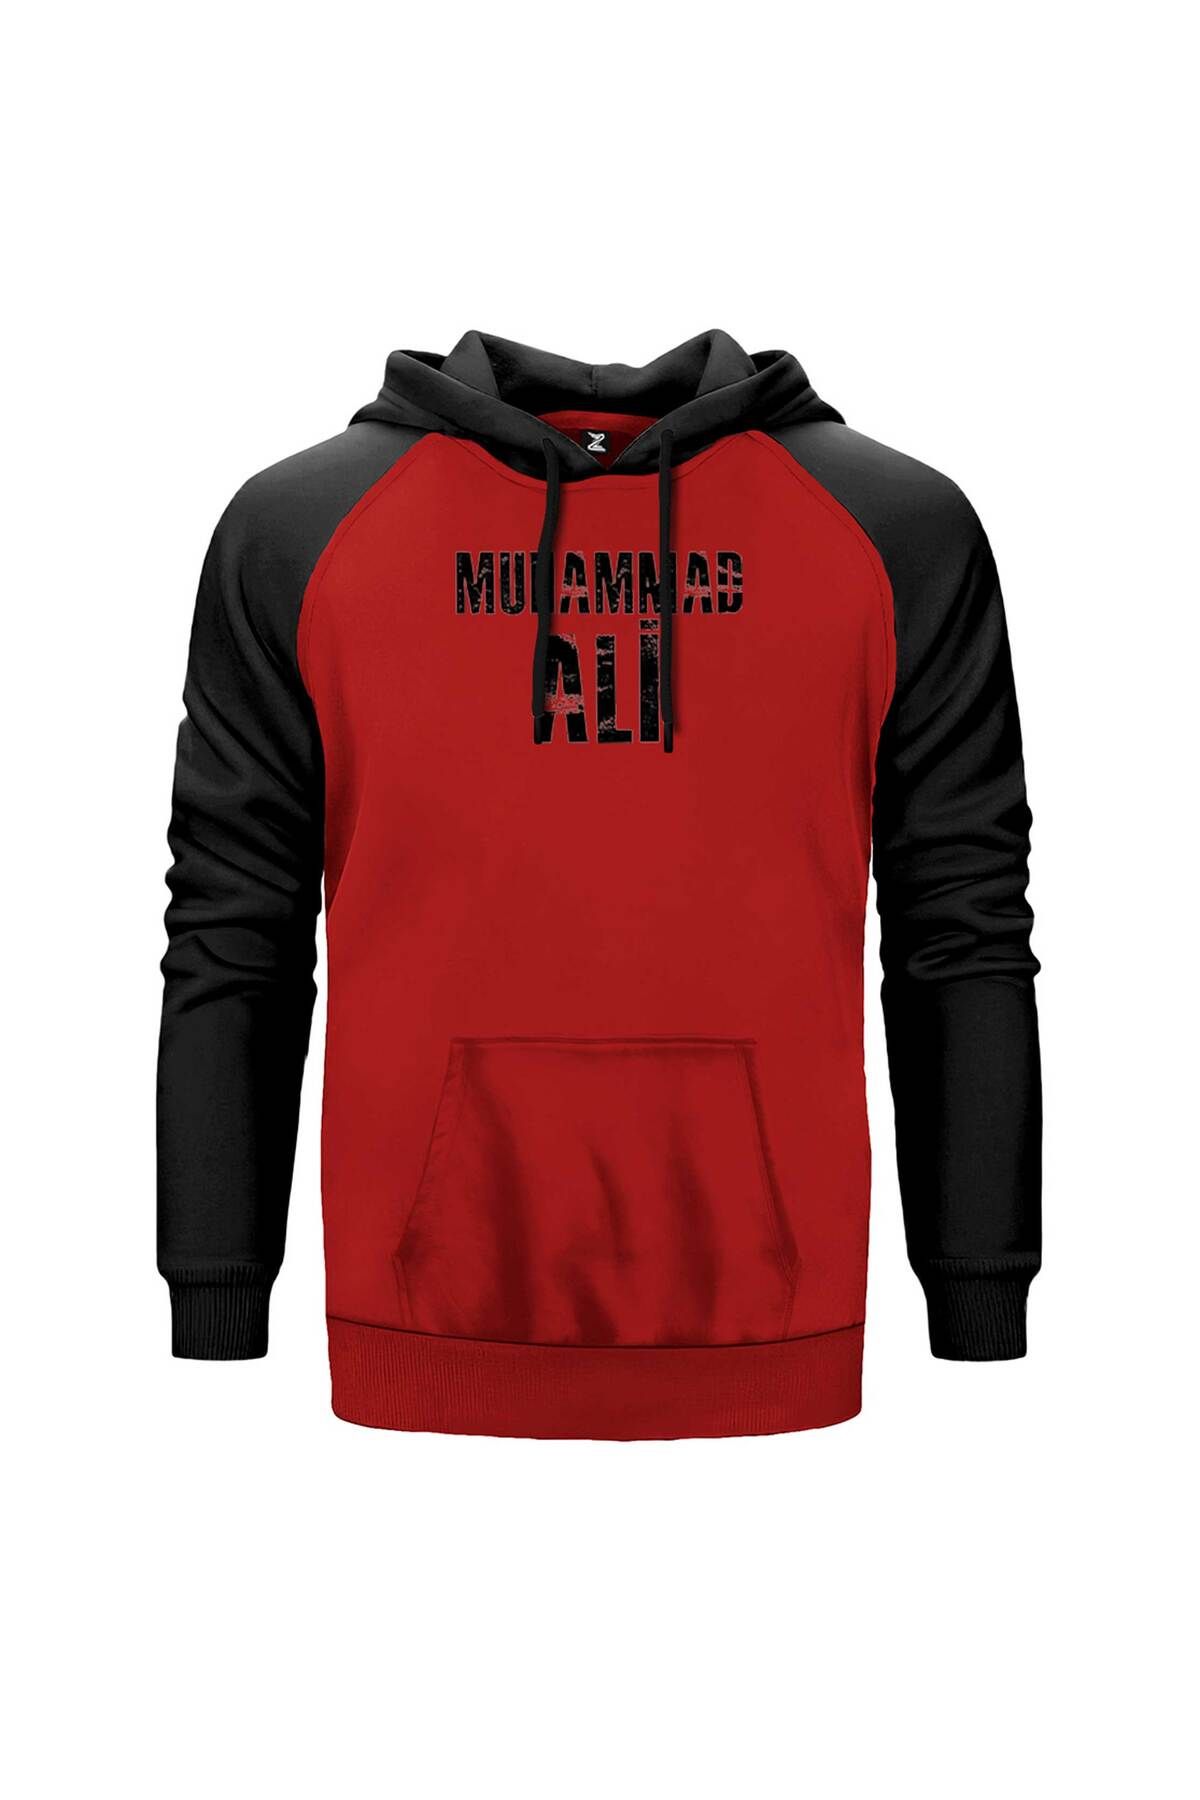 Z zepplin Muhammed Ali Black Text Kırmızı Renk Reglan Kol Sweatshirt